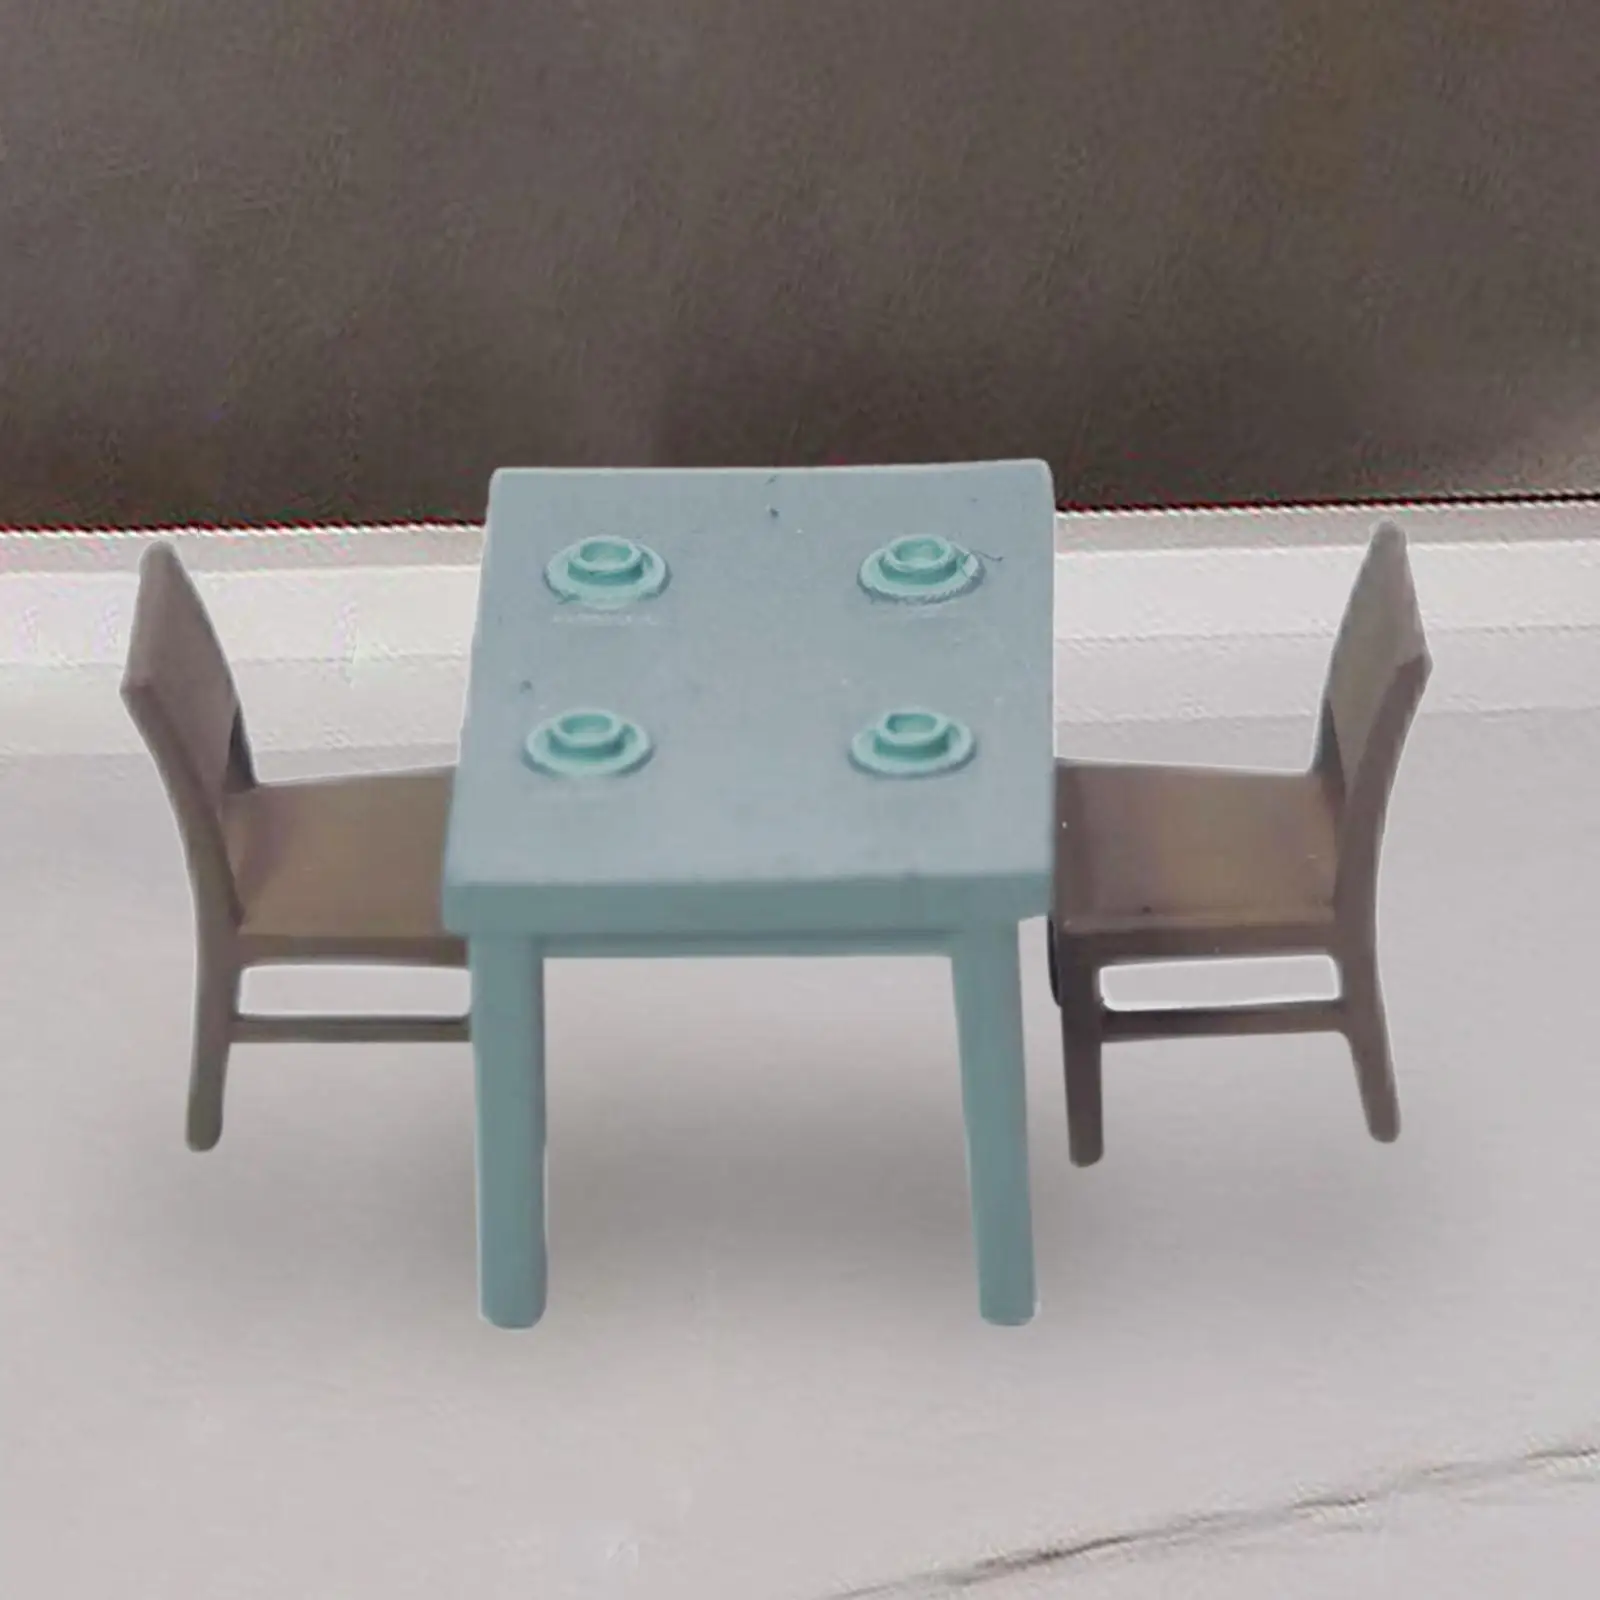 3 Pieces 1:87 HO Gauge Furniture Model Miniature Dollhouse Accessories